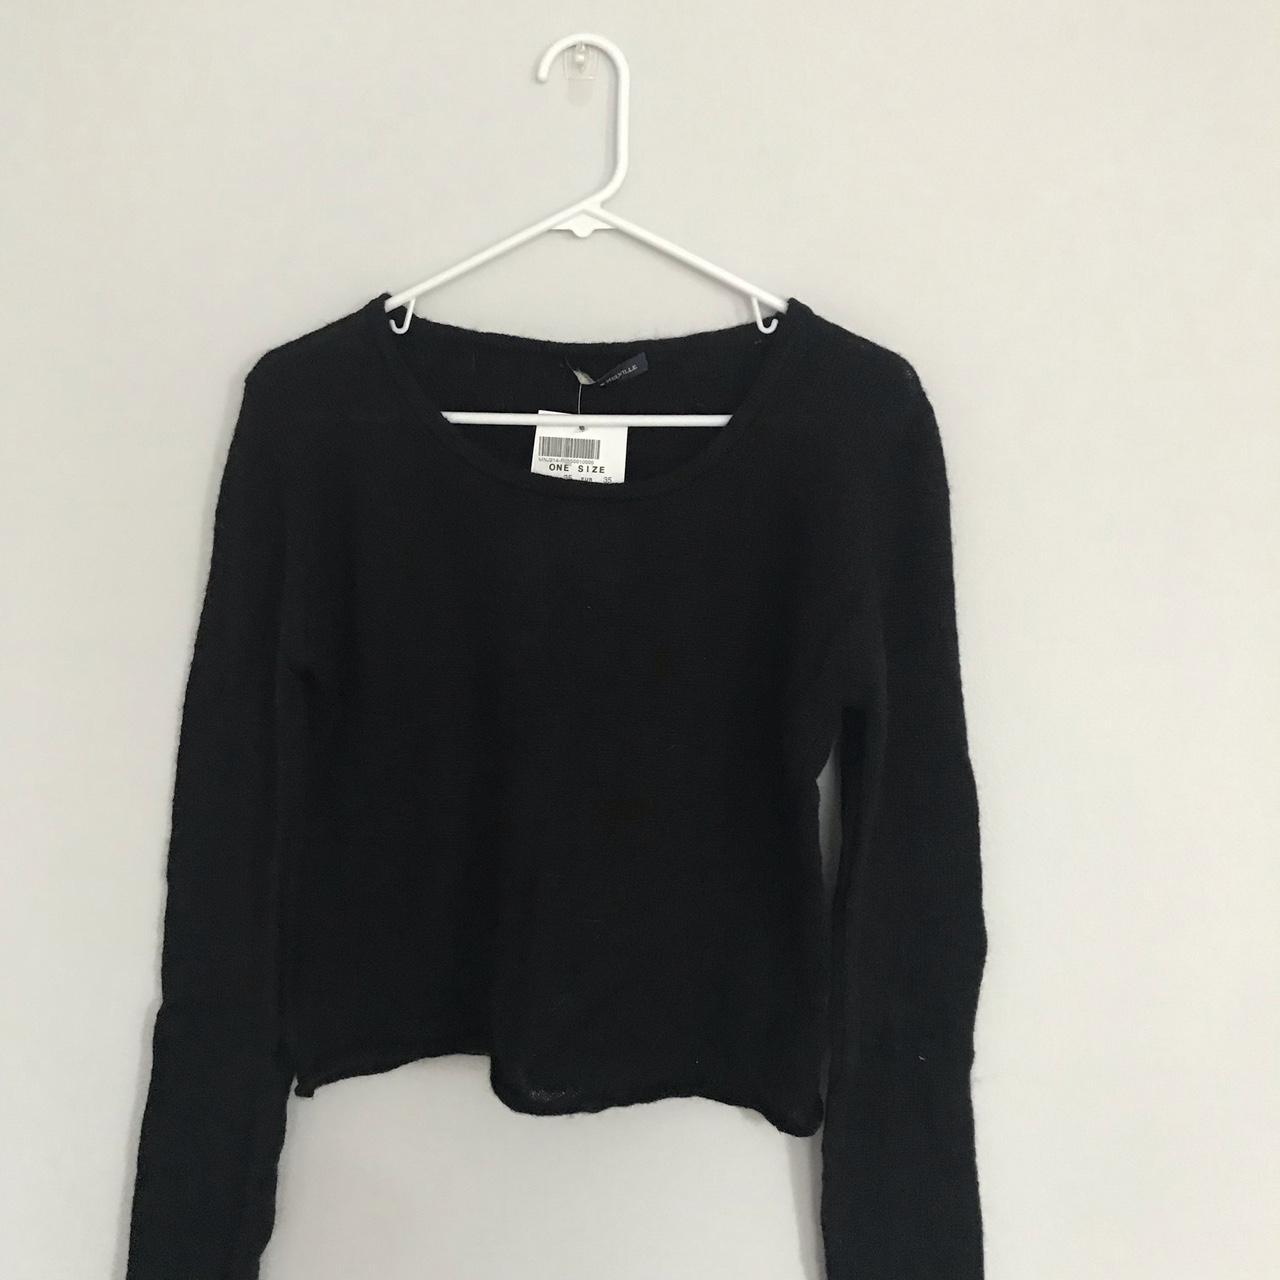 Brandy Melville Andi Mohair Sweater in Black 🖤 BNWT.... - Depop